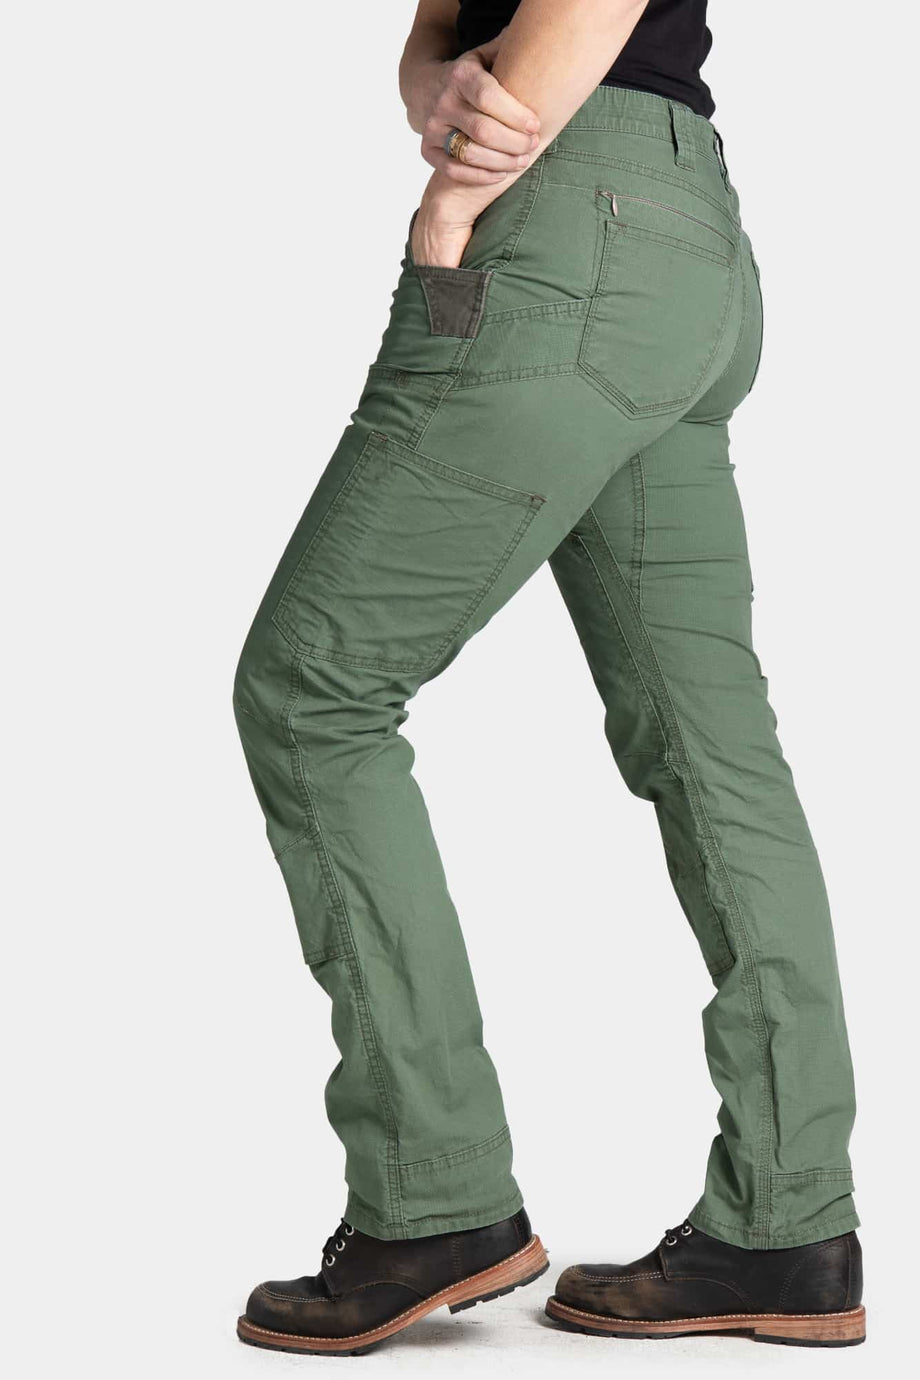 Off Duty Trousers in Green Stripe – Whimsigirl